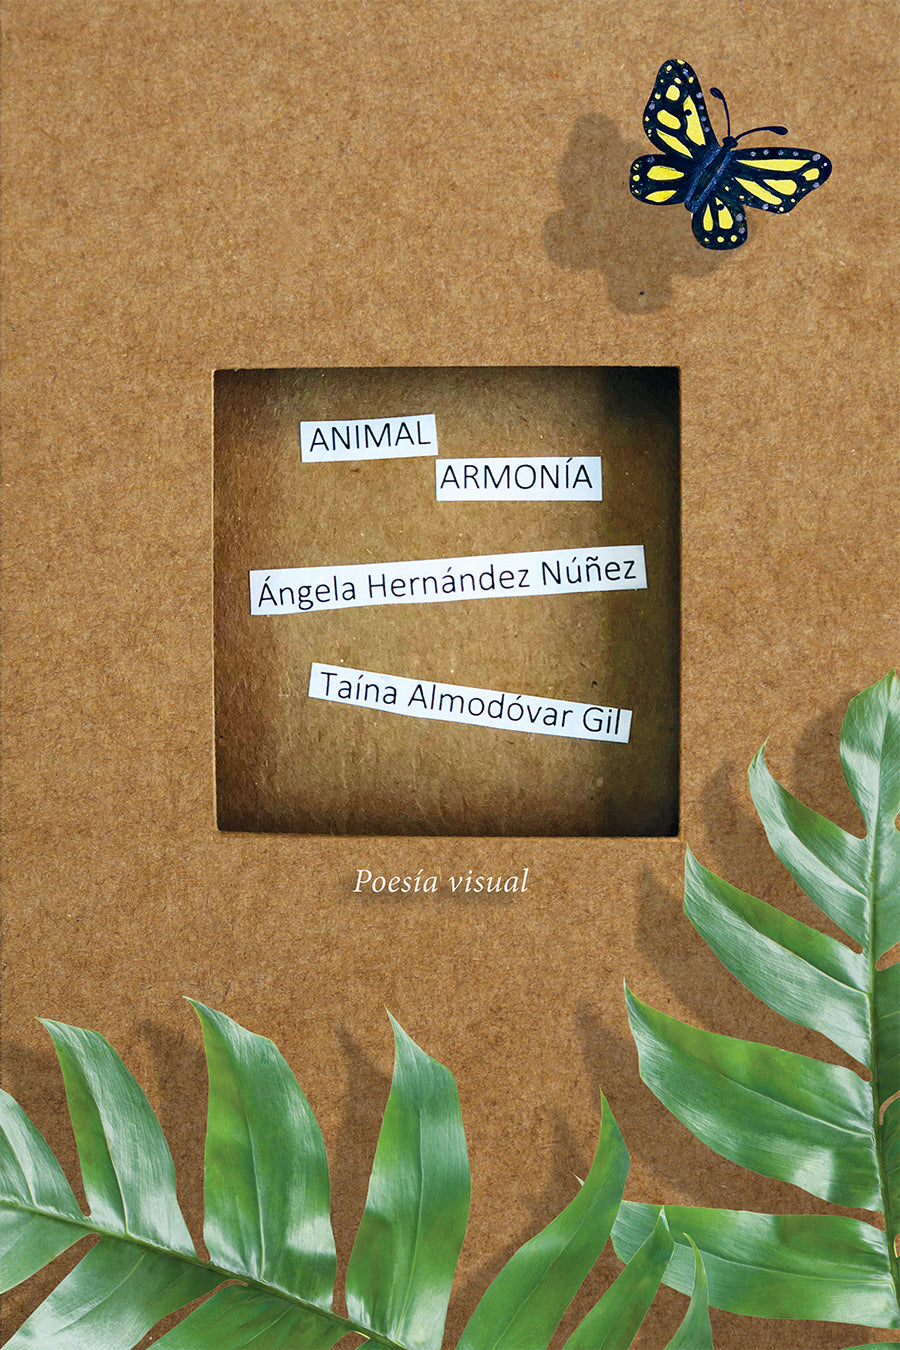 Libro "Animal armonía"